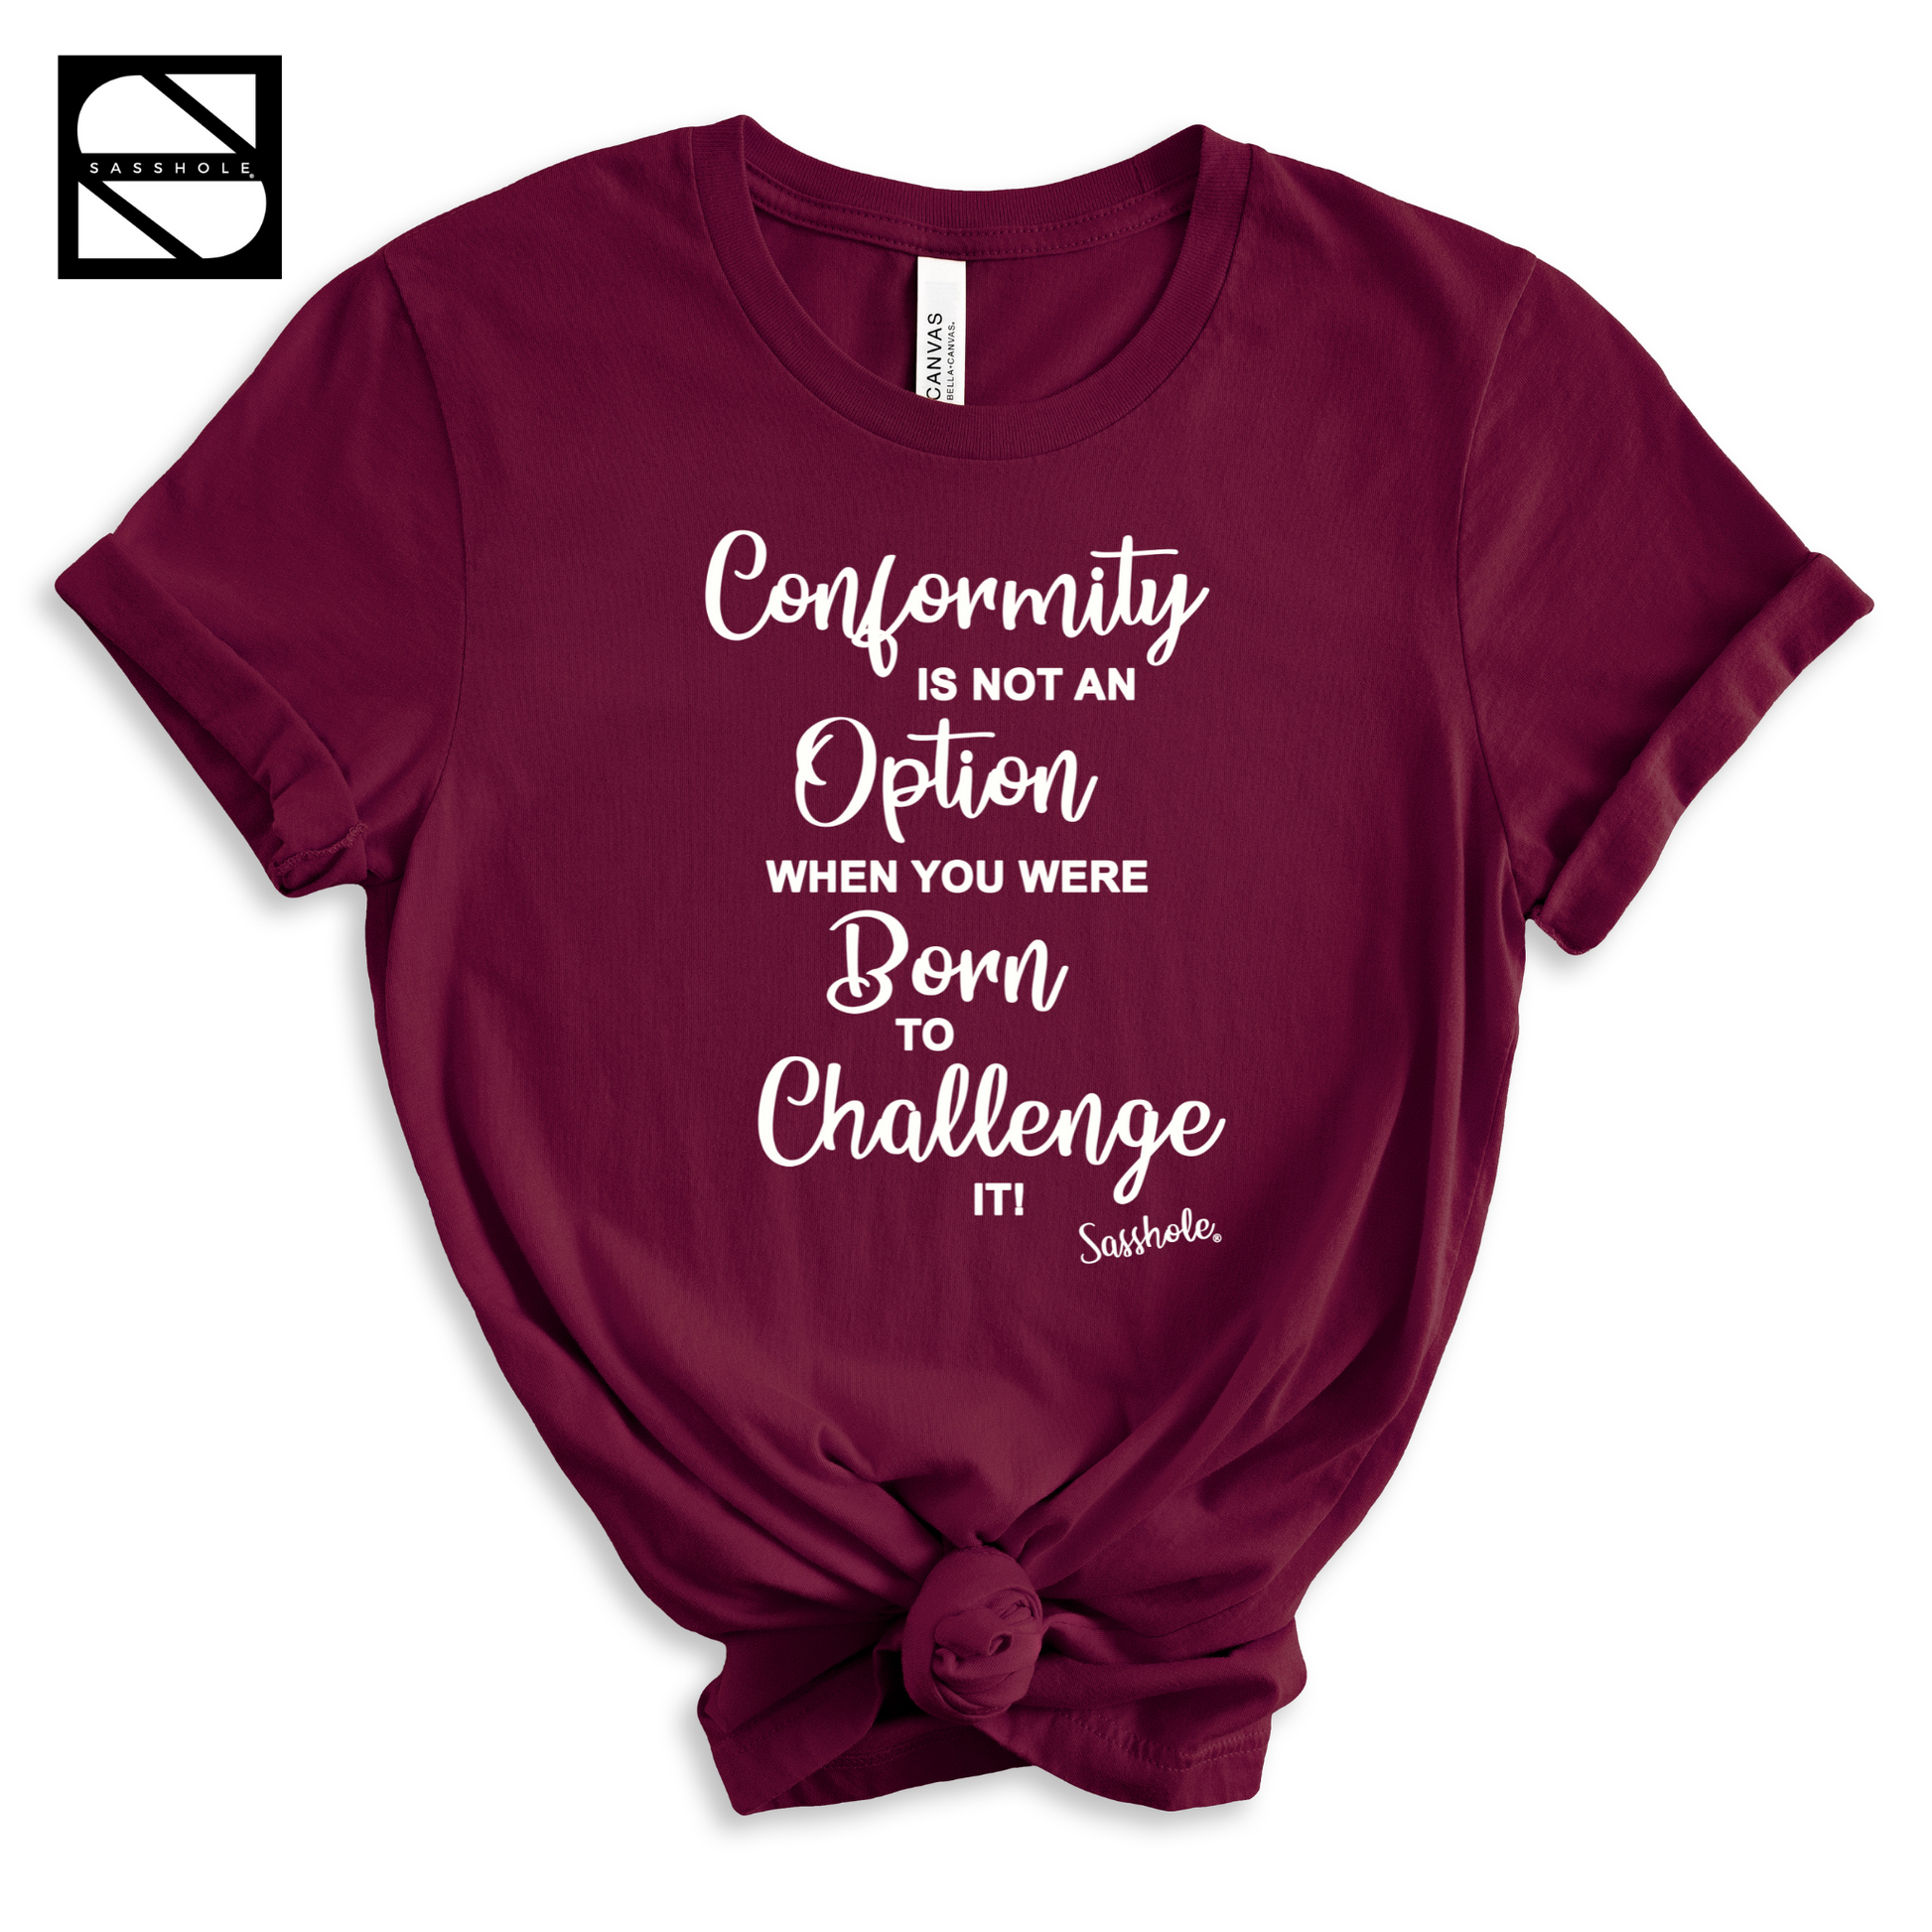 motivational maroon shirt for women